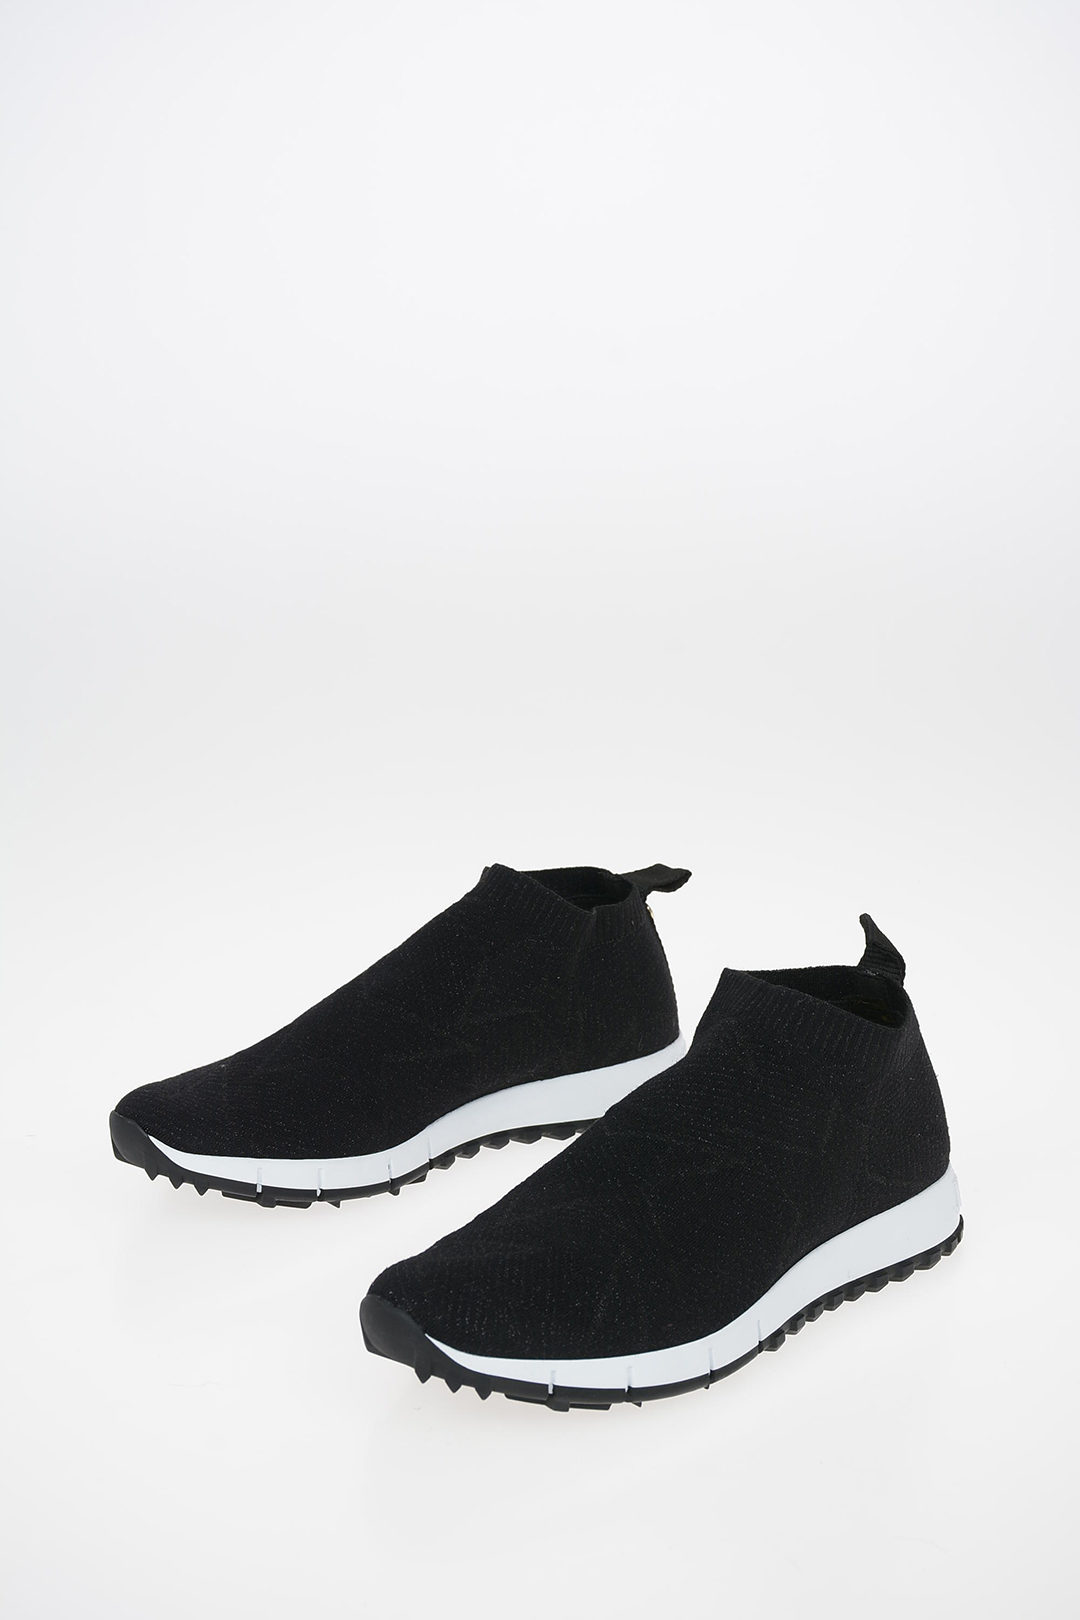 Fordampe generelt Værdiløs Jimmy Choo Fabric NORWAY Sock Sneakers women - Glamood Outlet